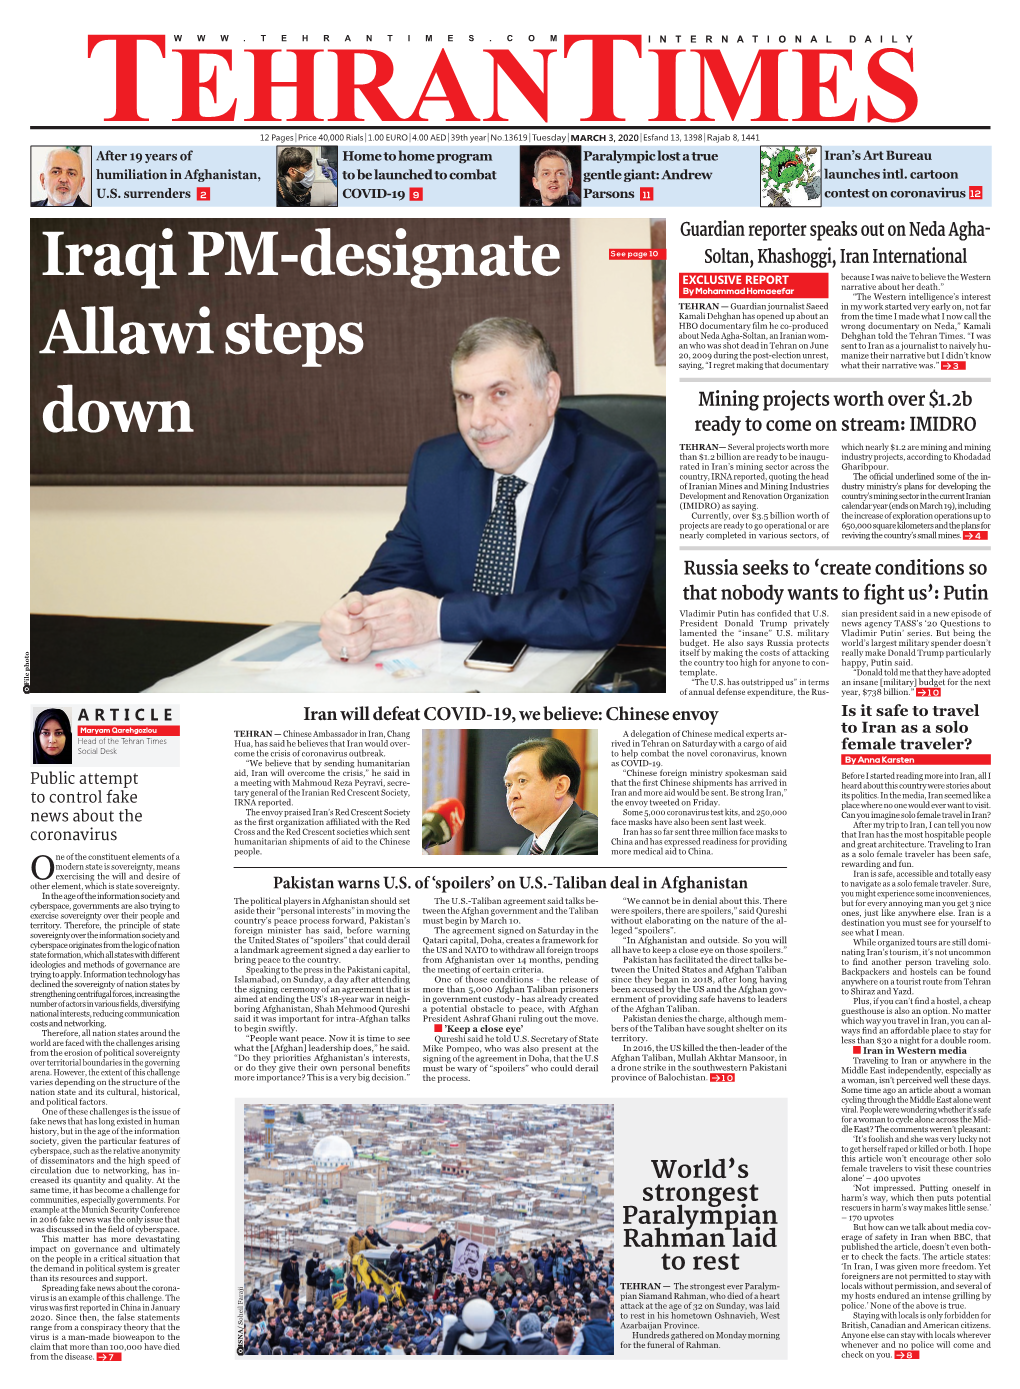 Iraqi PM-Designate Allawi Steps Down